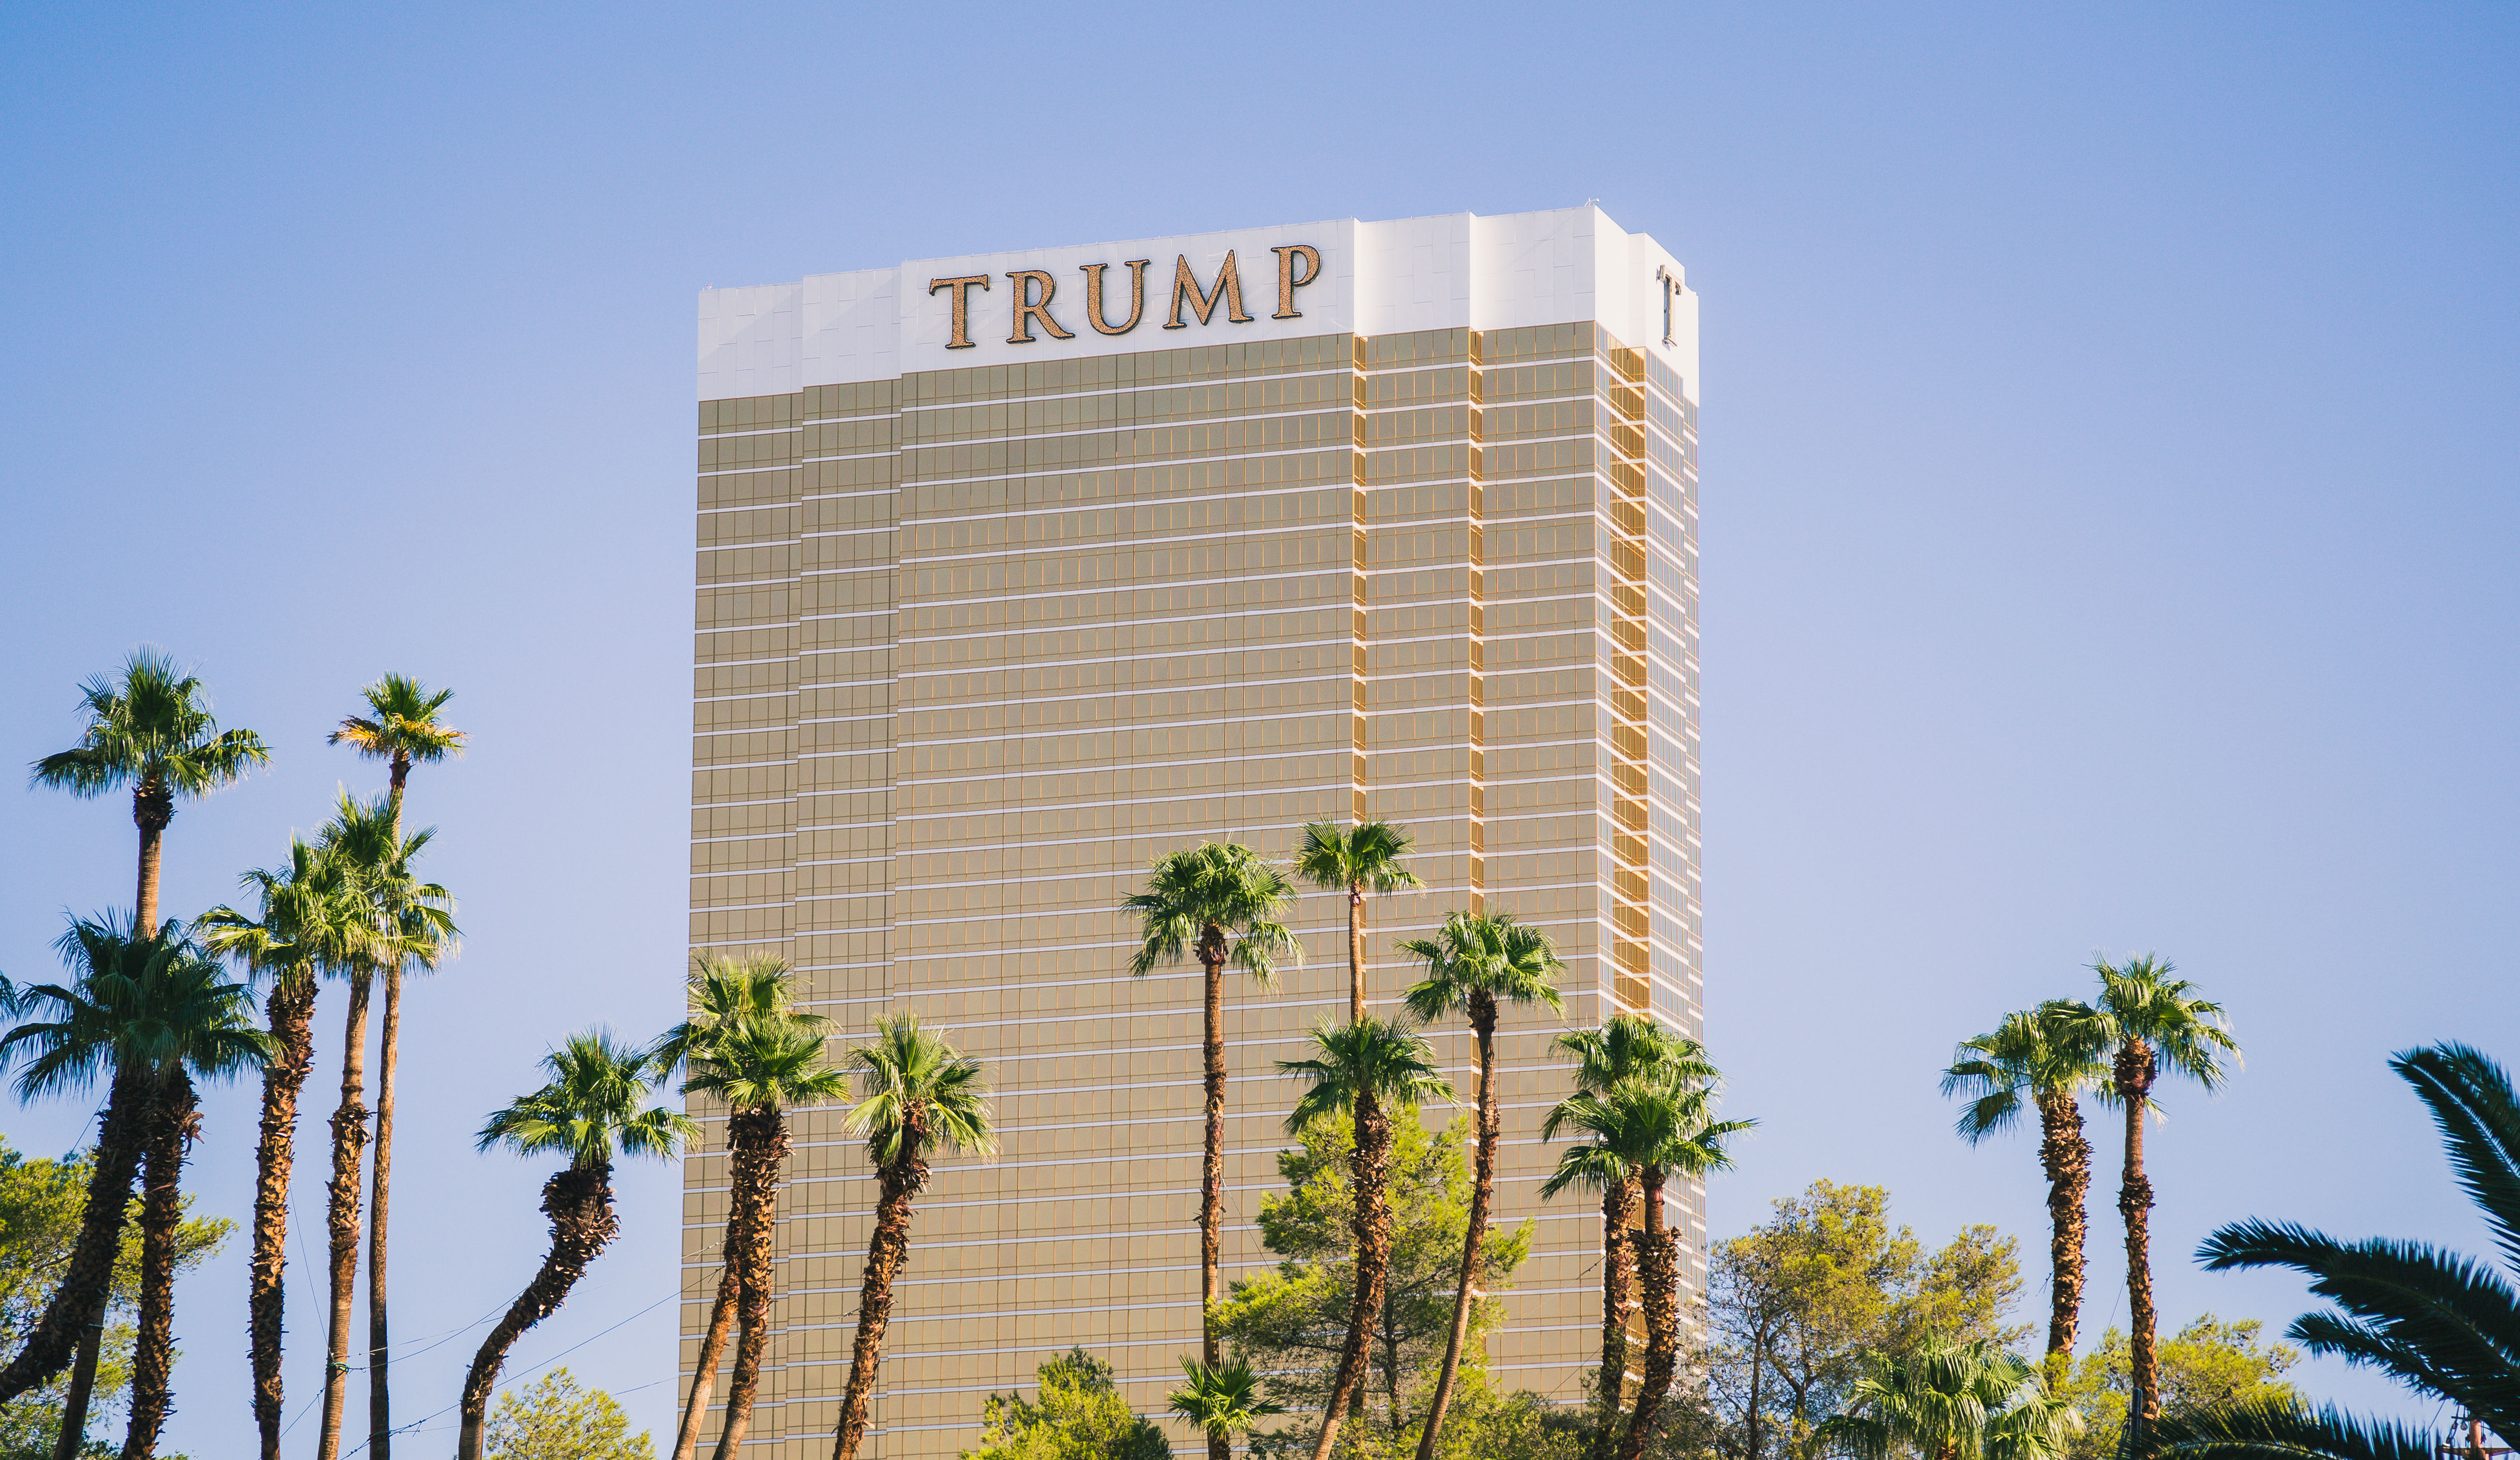 Donald Trump's hotel